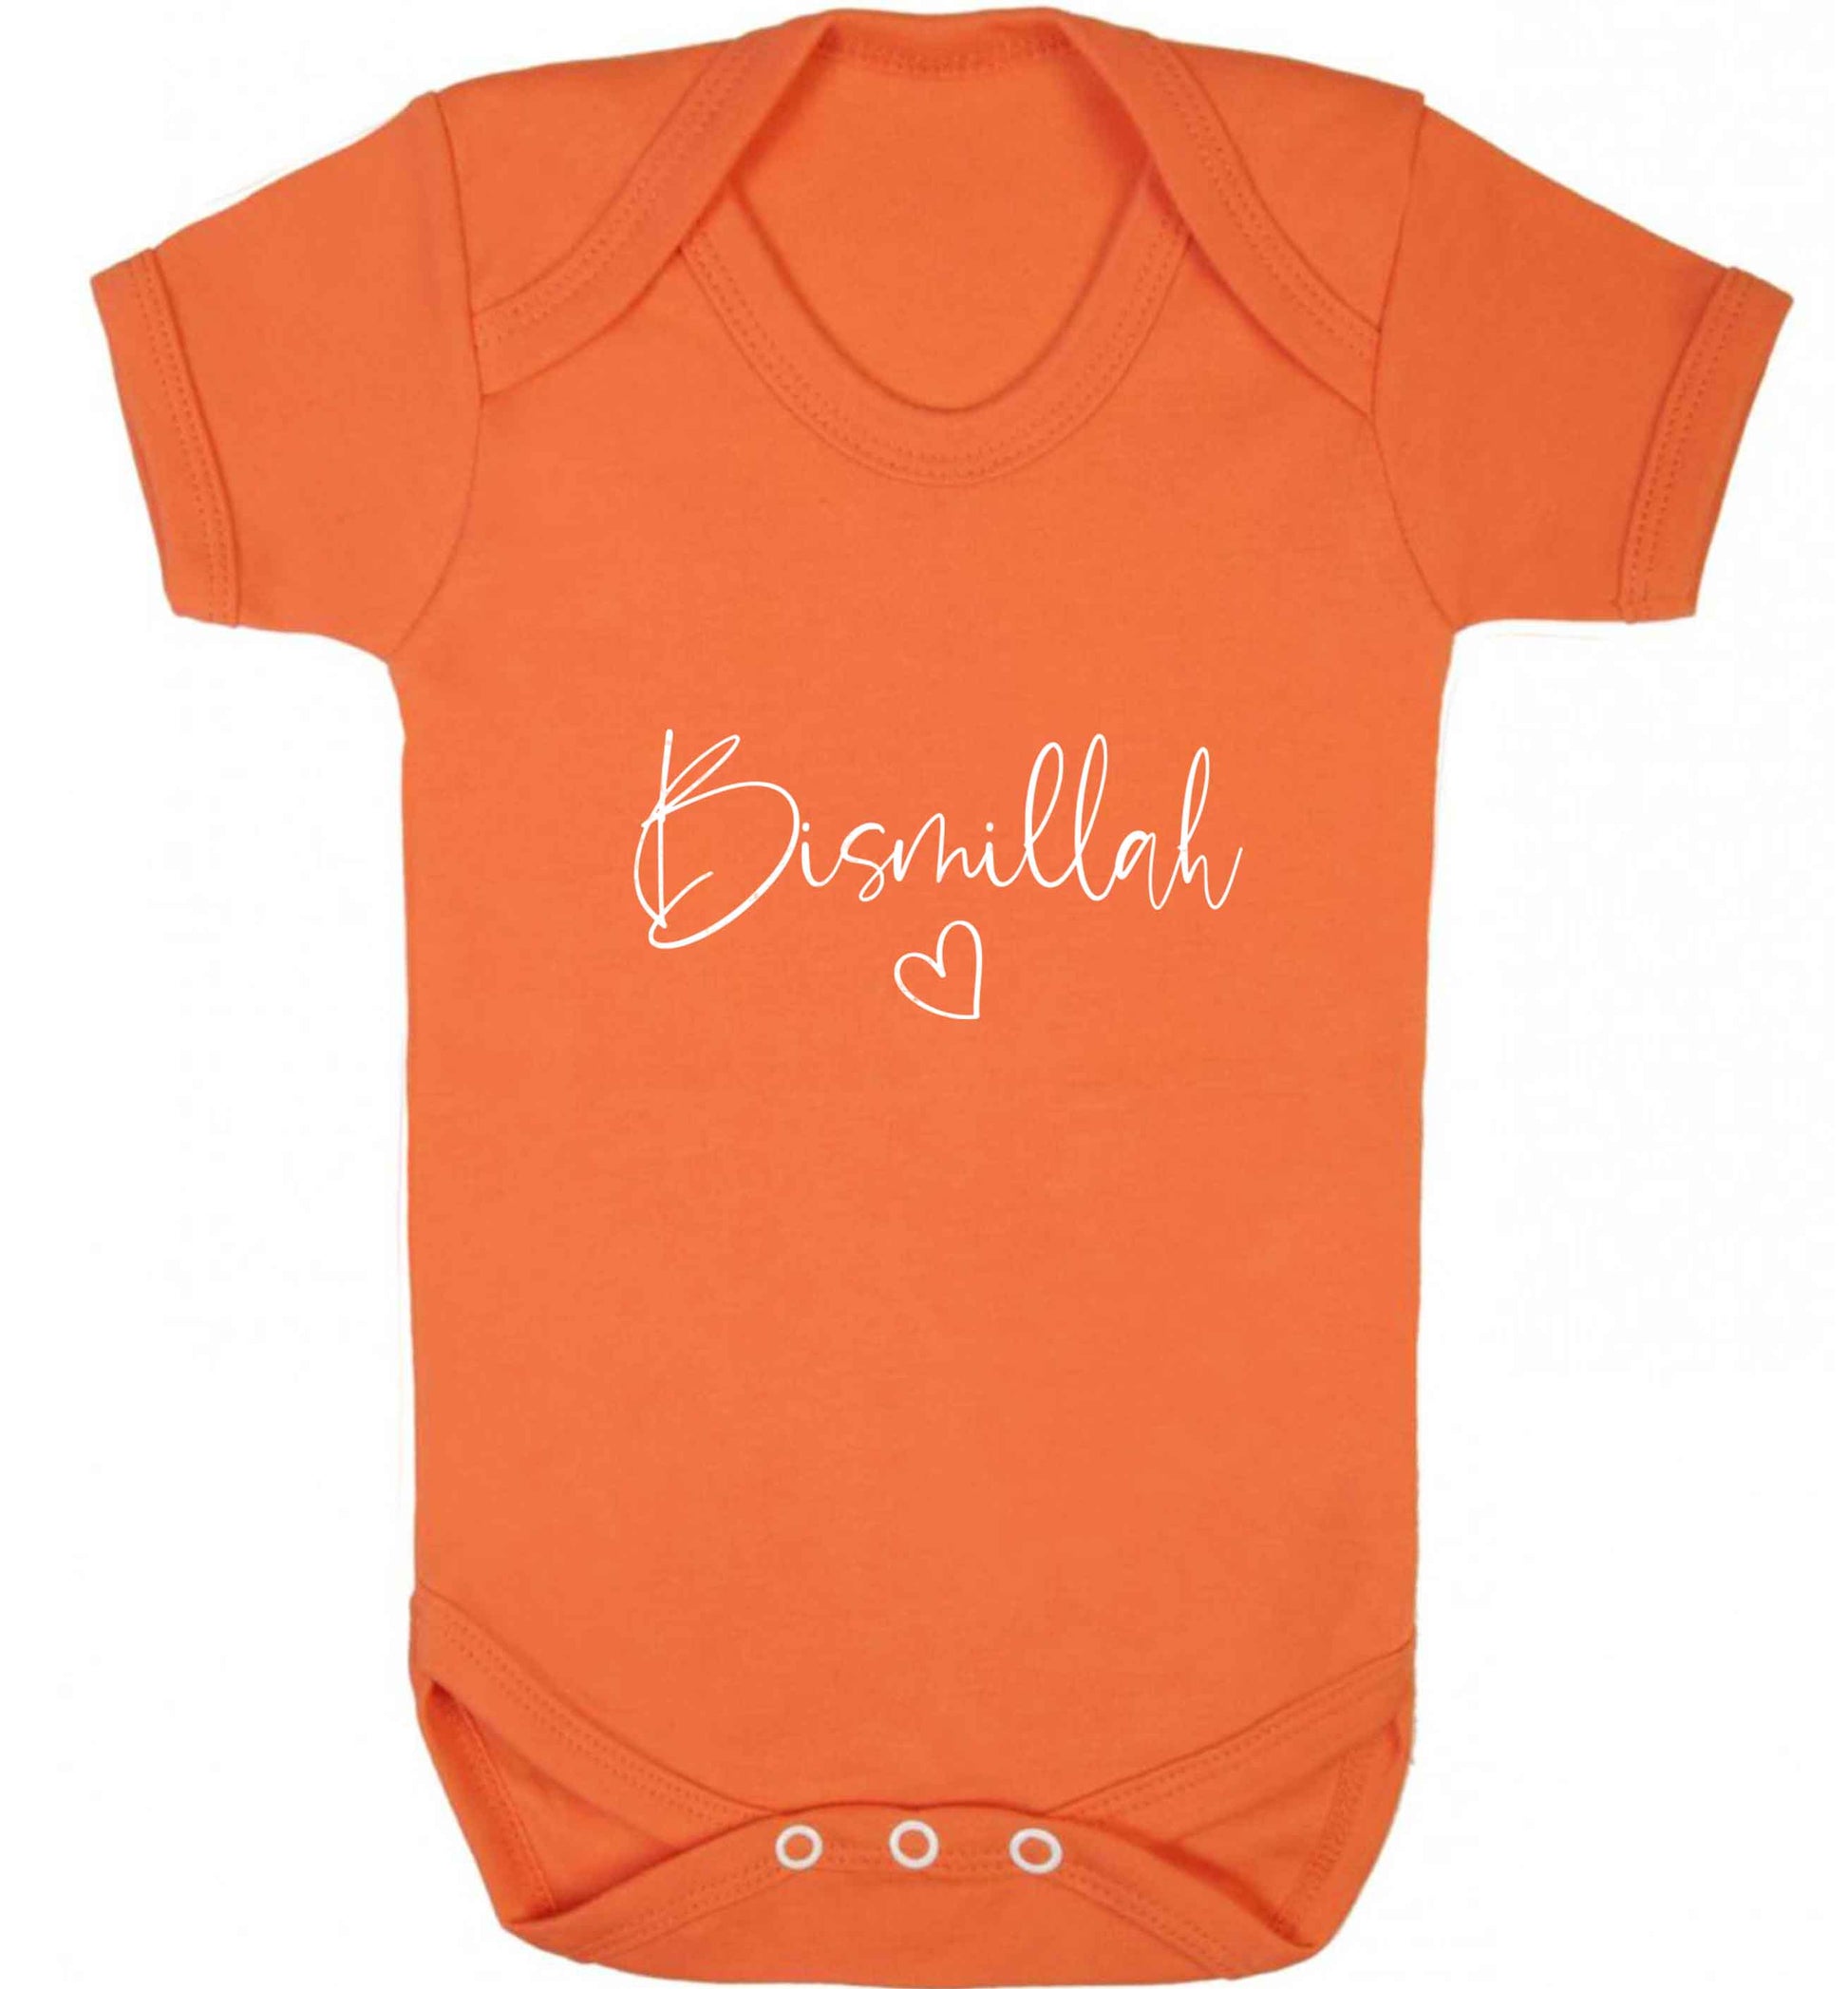 Bismillah baby vest orange 18-24 months